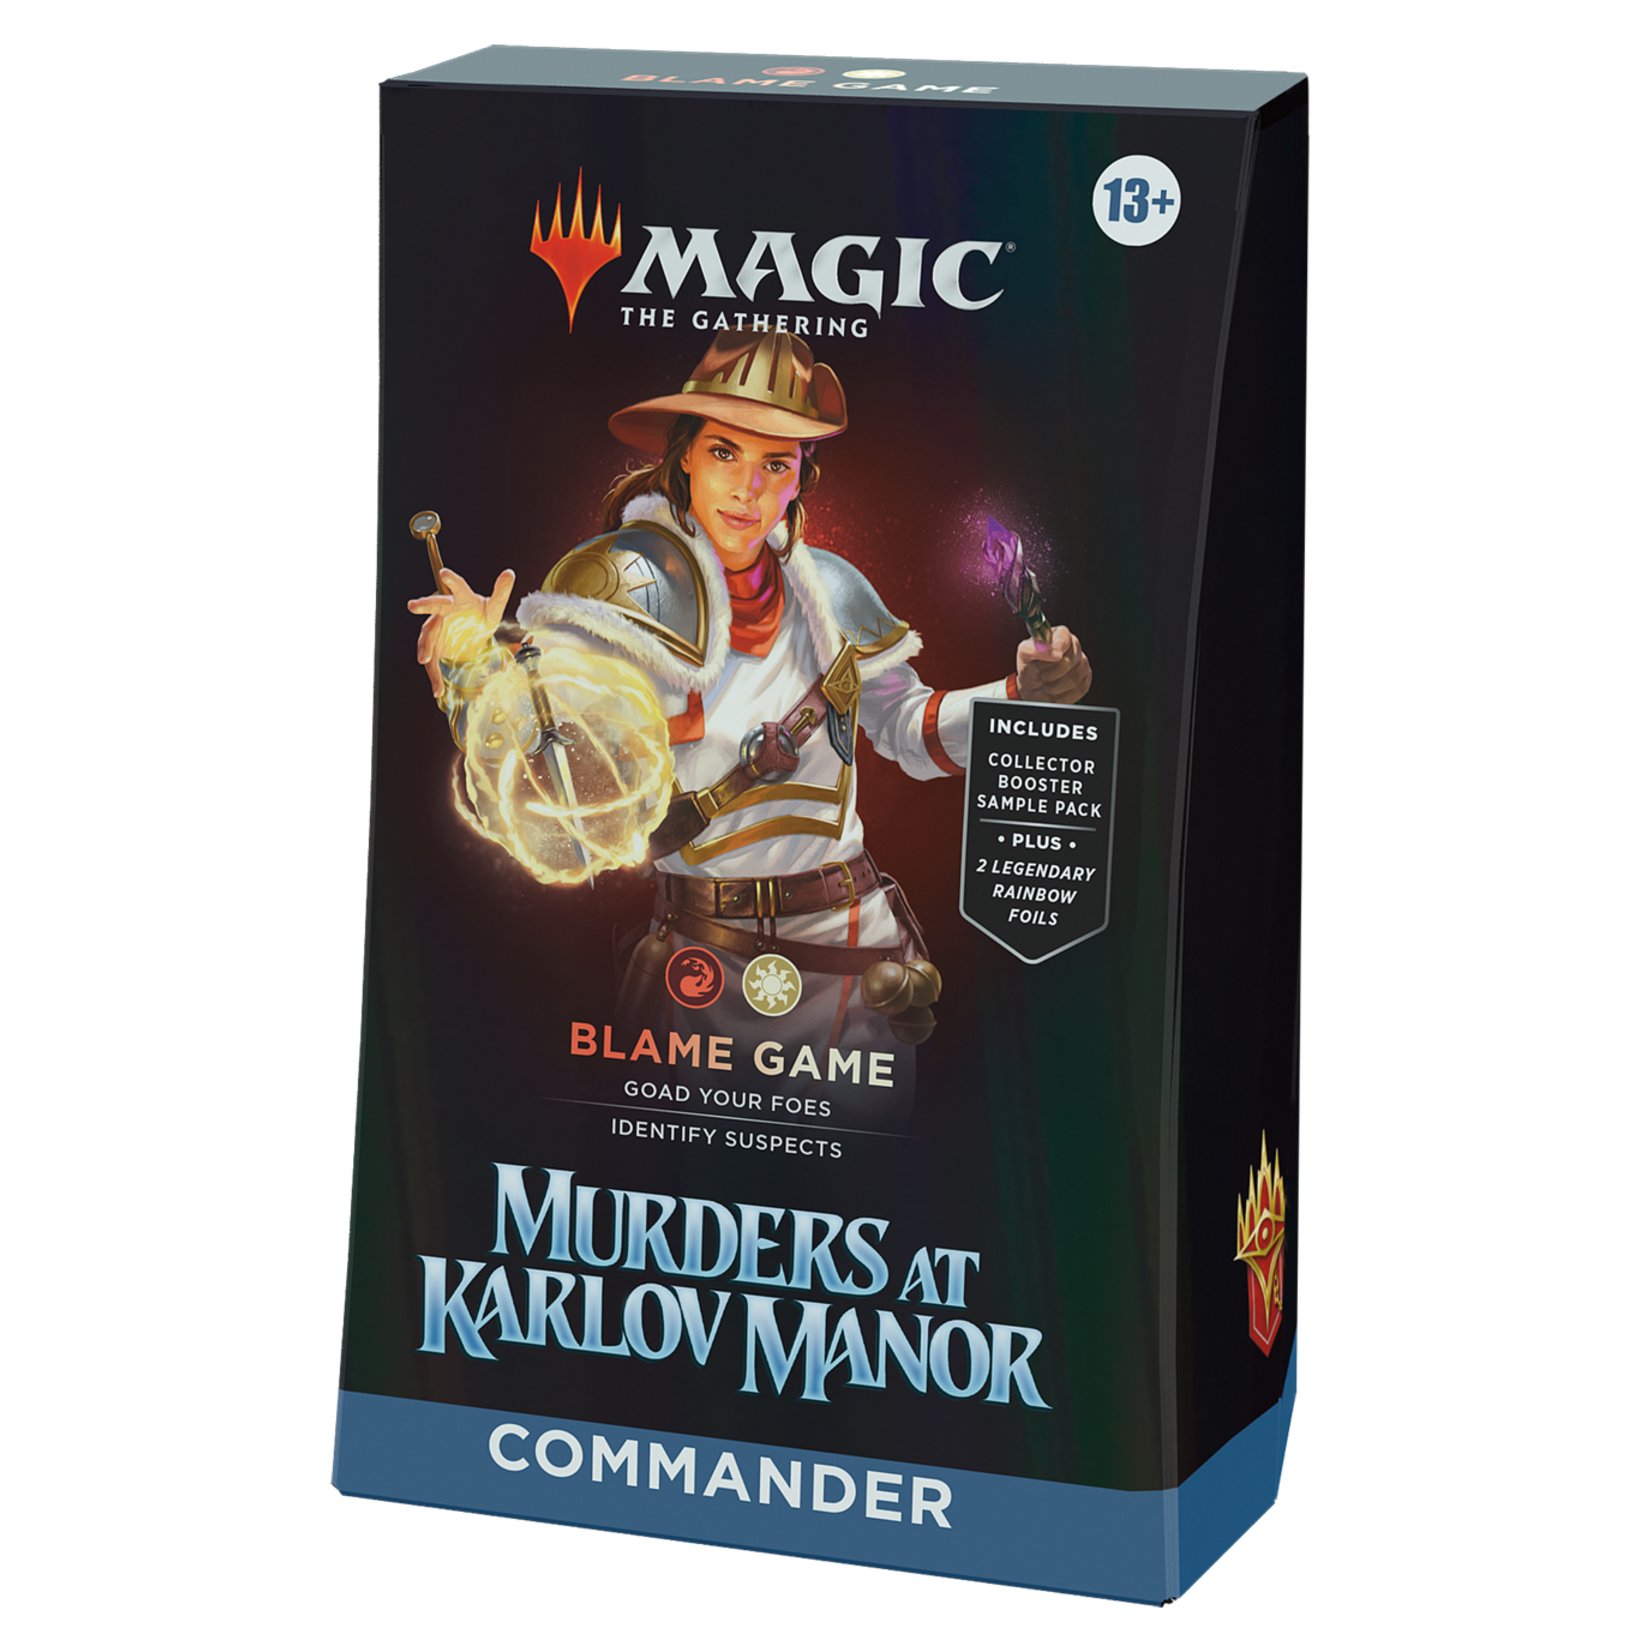 Magic: The Gathering Magic: The Gathering – Murders at Karlov Manor Commander Deck - Blame Game